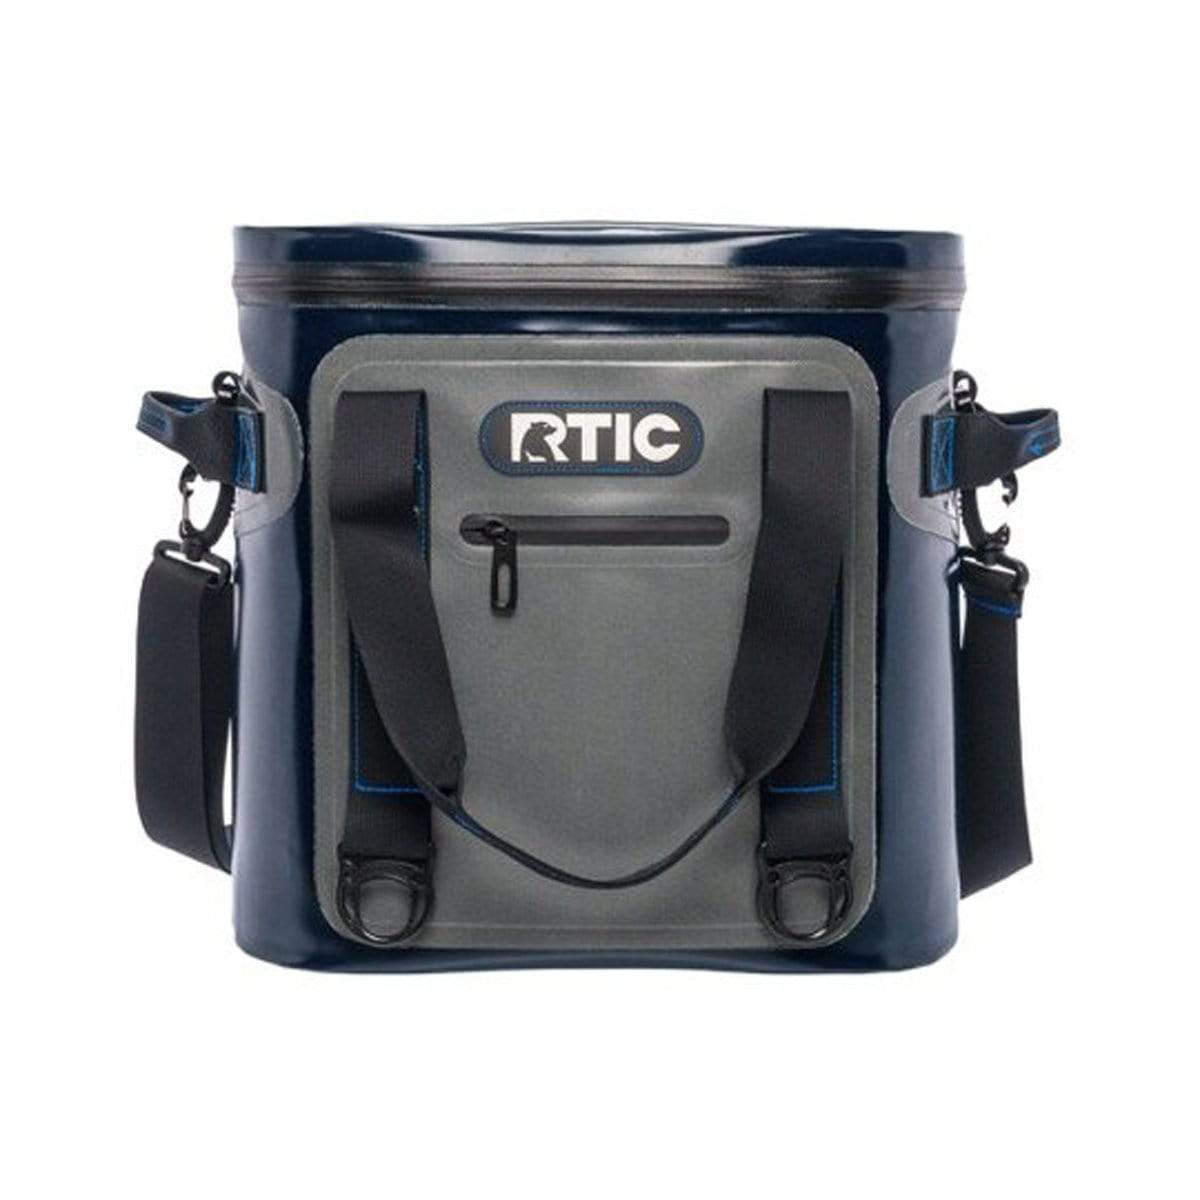 Custom RTIC Soft Pack Cooler 20 Can 10% Off Cyber Monday – Custom Branding